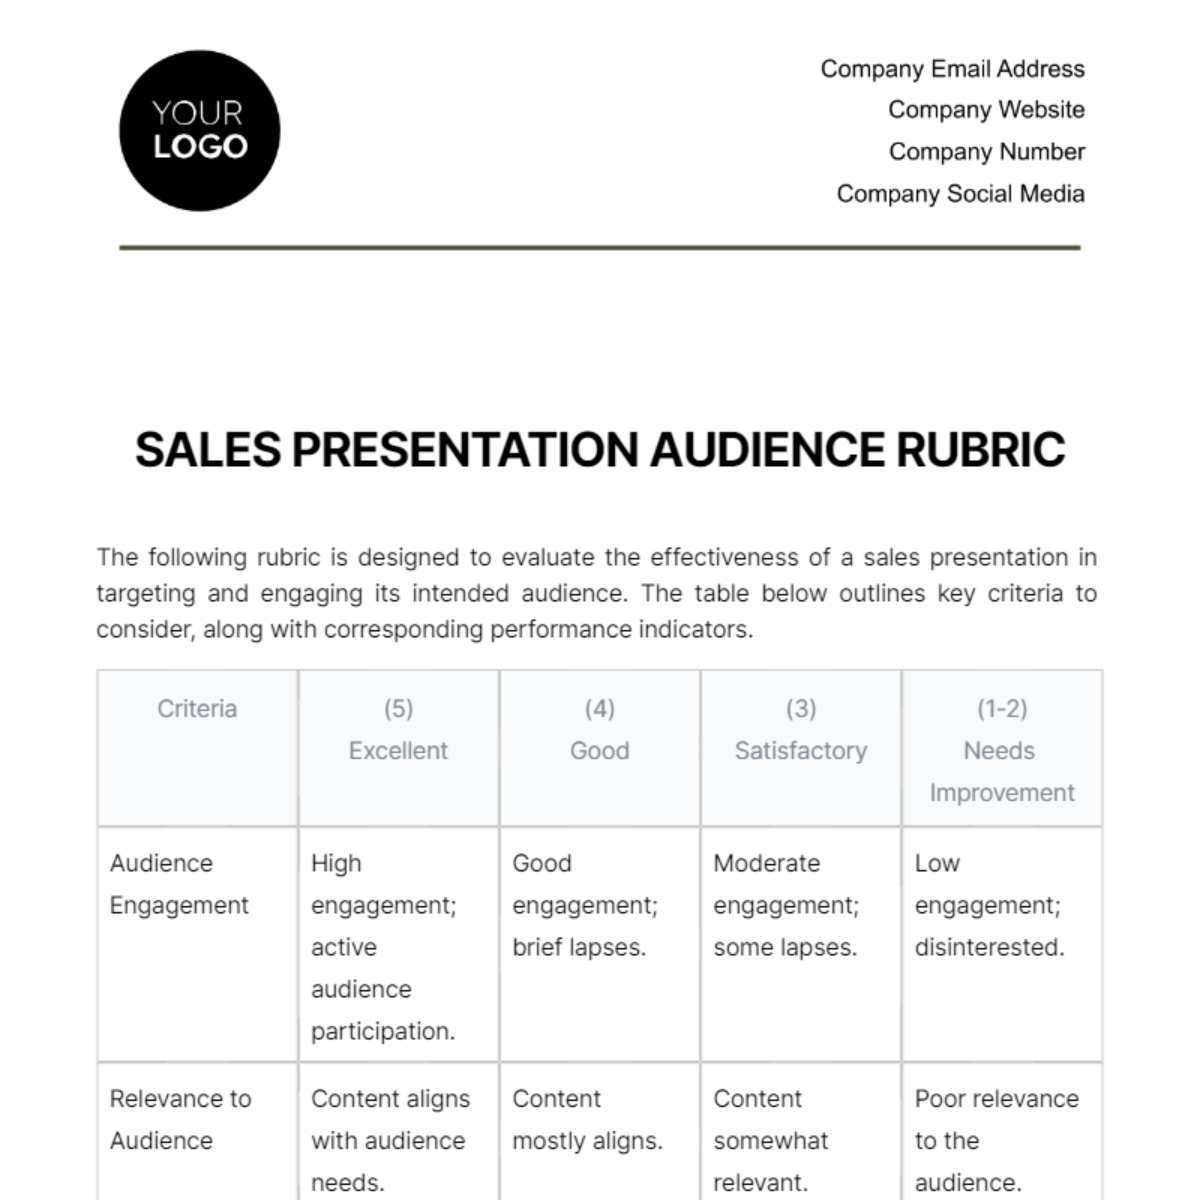 Sales Presentation Audience Rubric Template